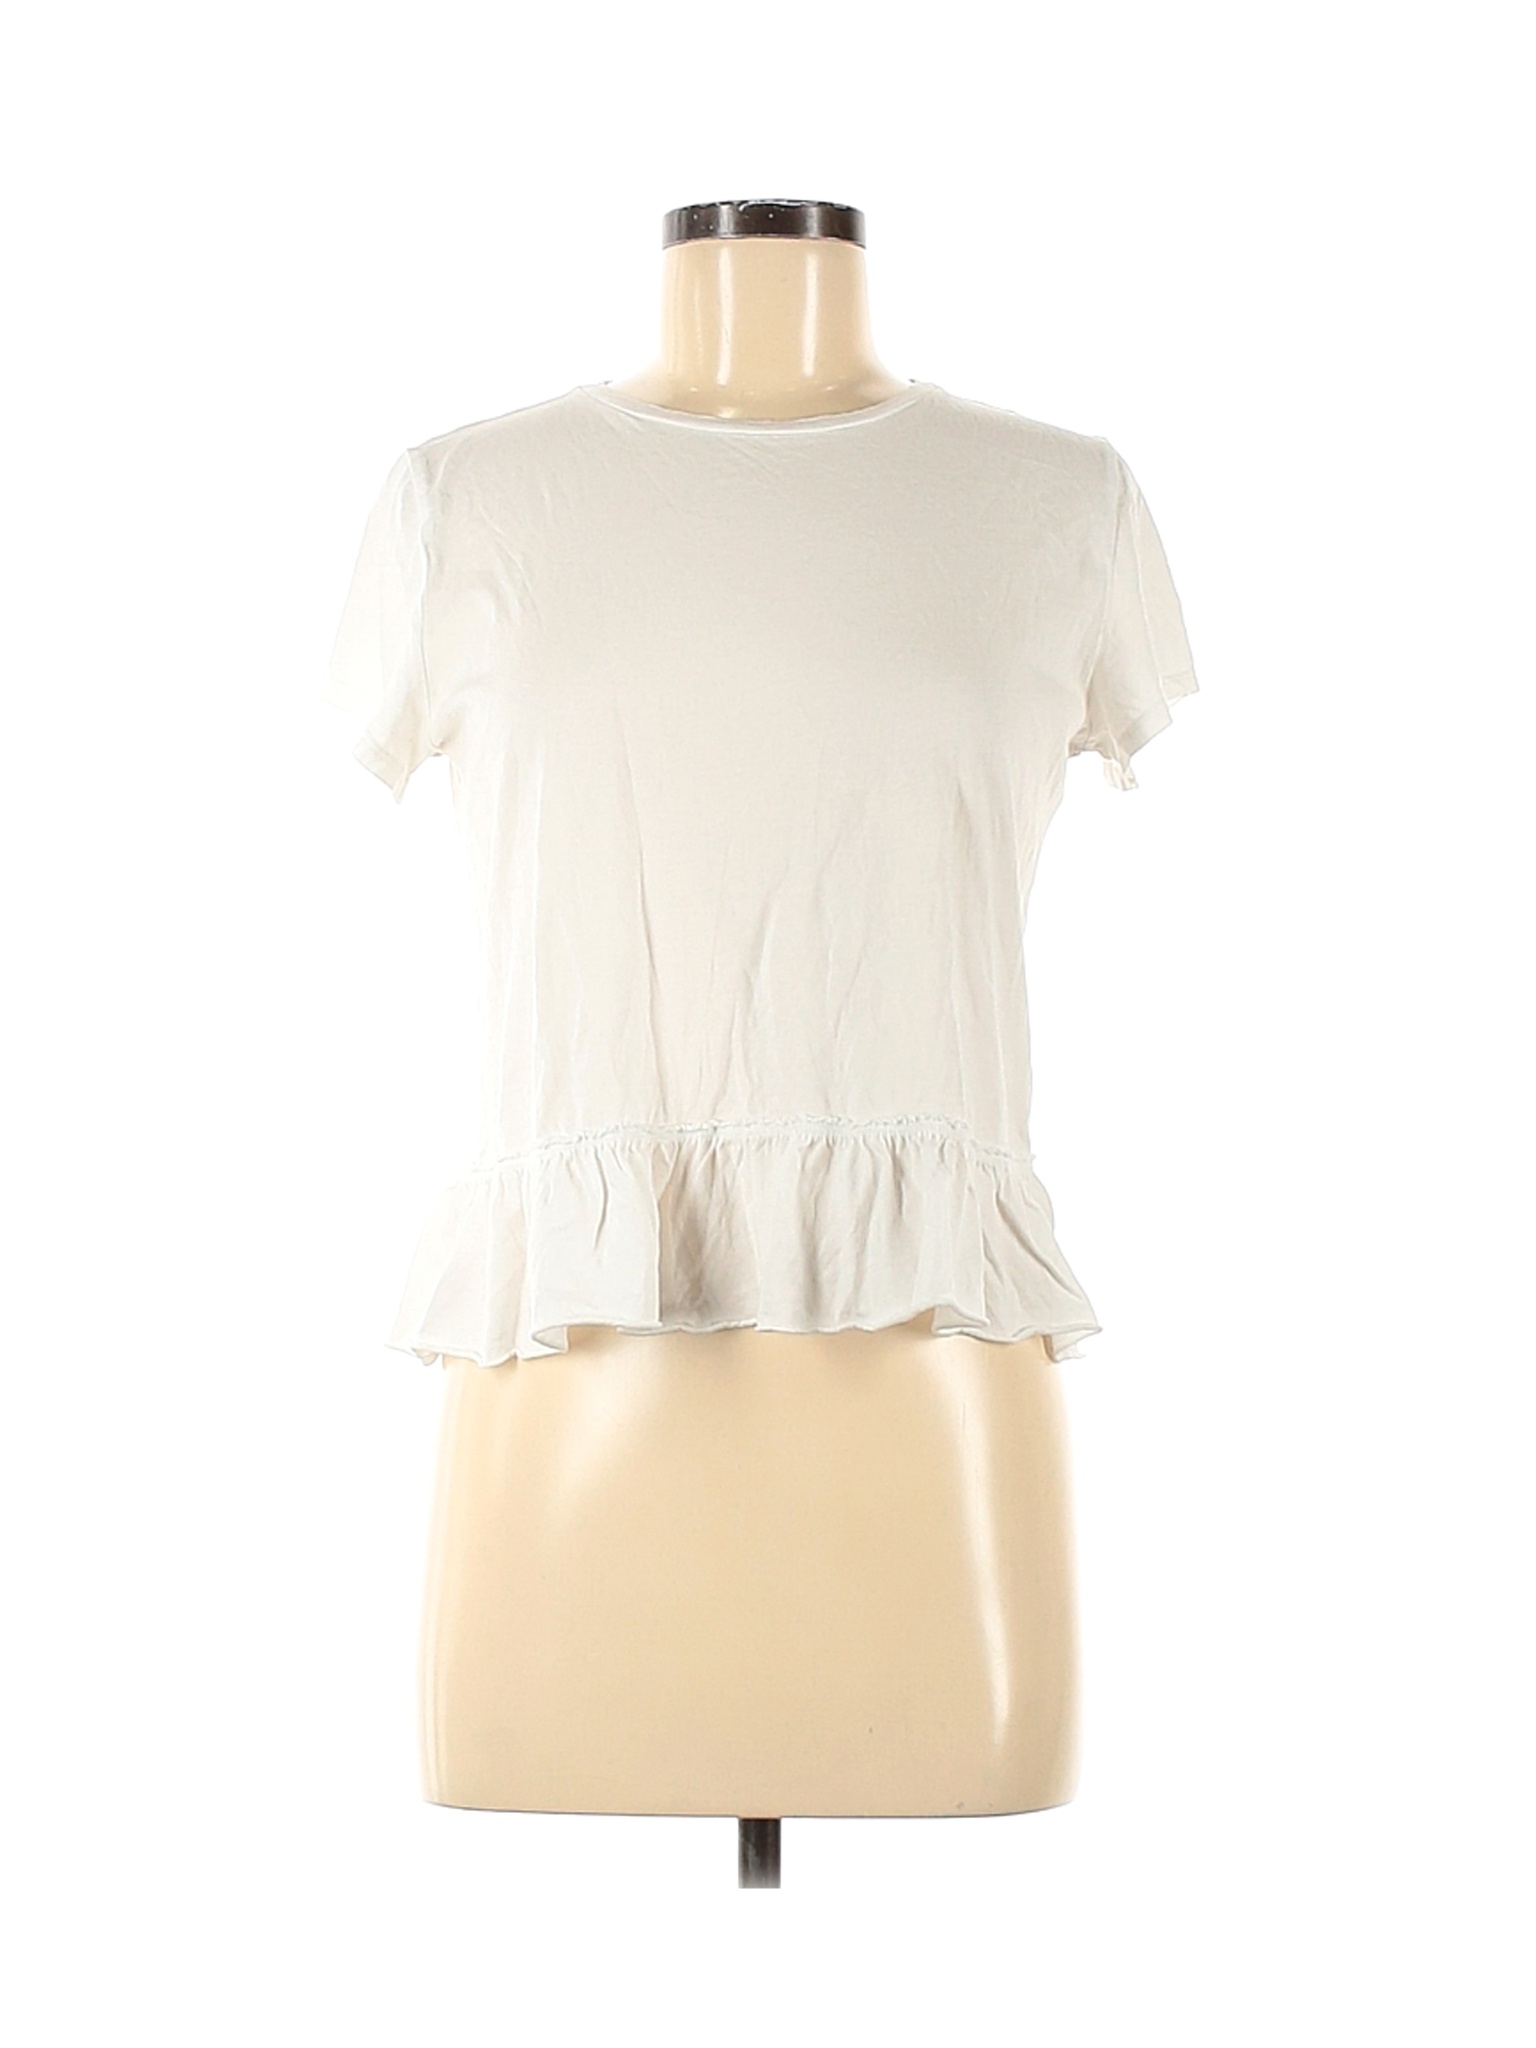 Abercrombie & Fitch Women Ivory Short Sleeve Top M | eBay